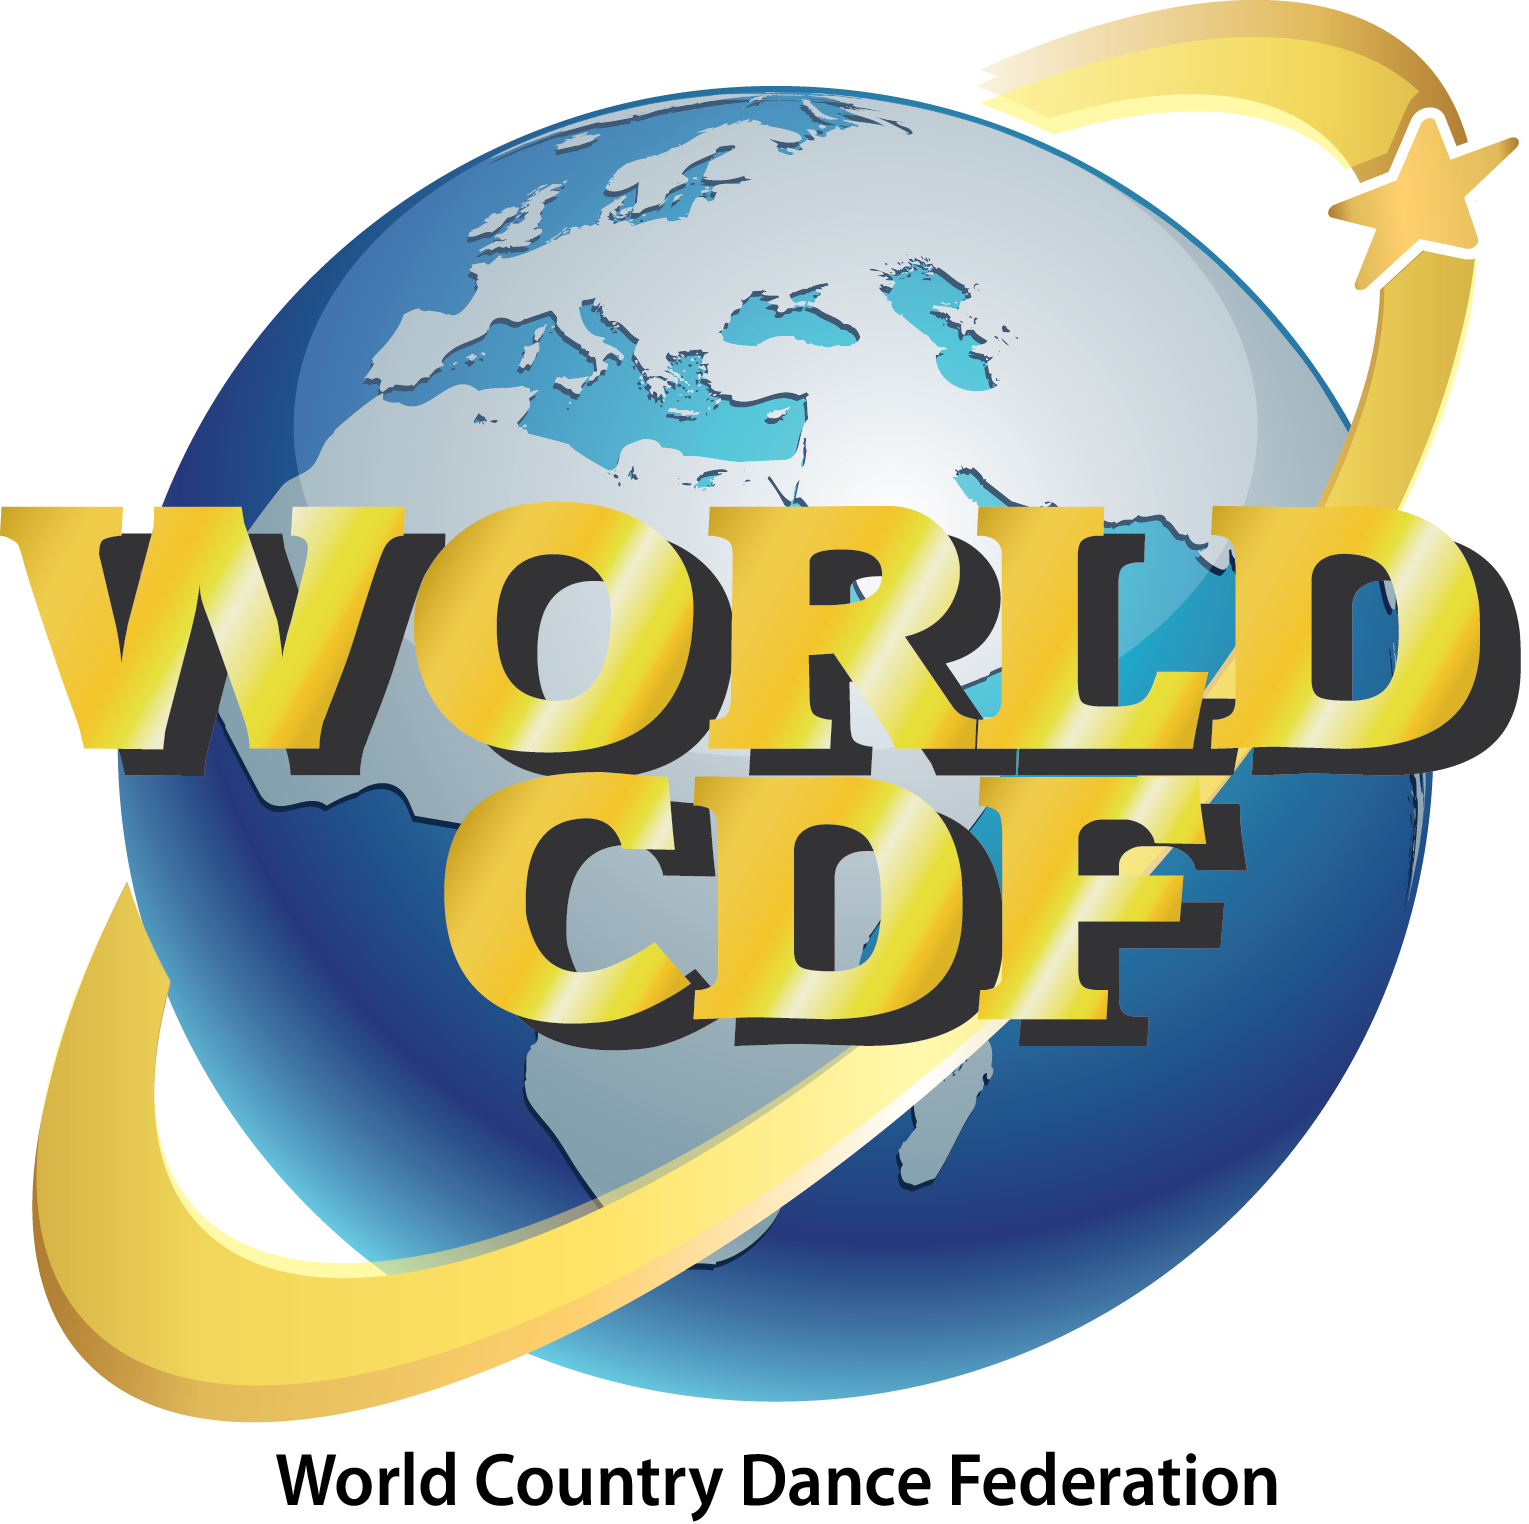 Worldcdf 2013 logo Black Text-Transparent-HQ version